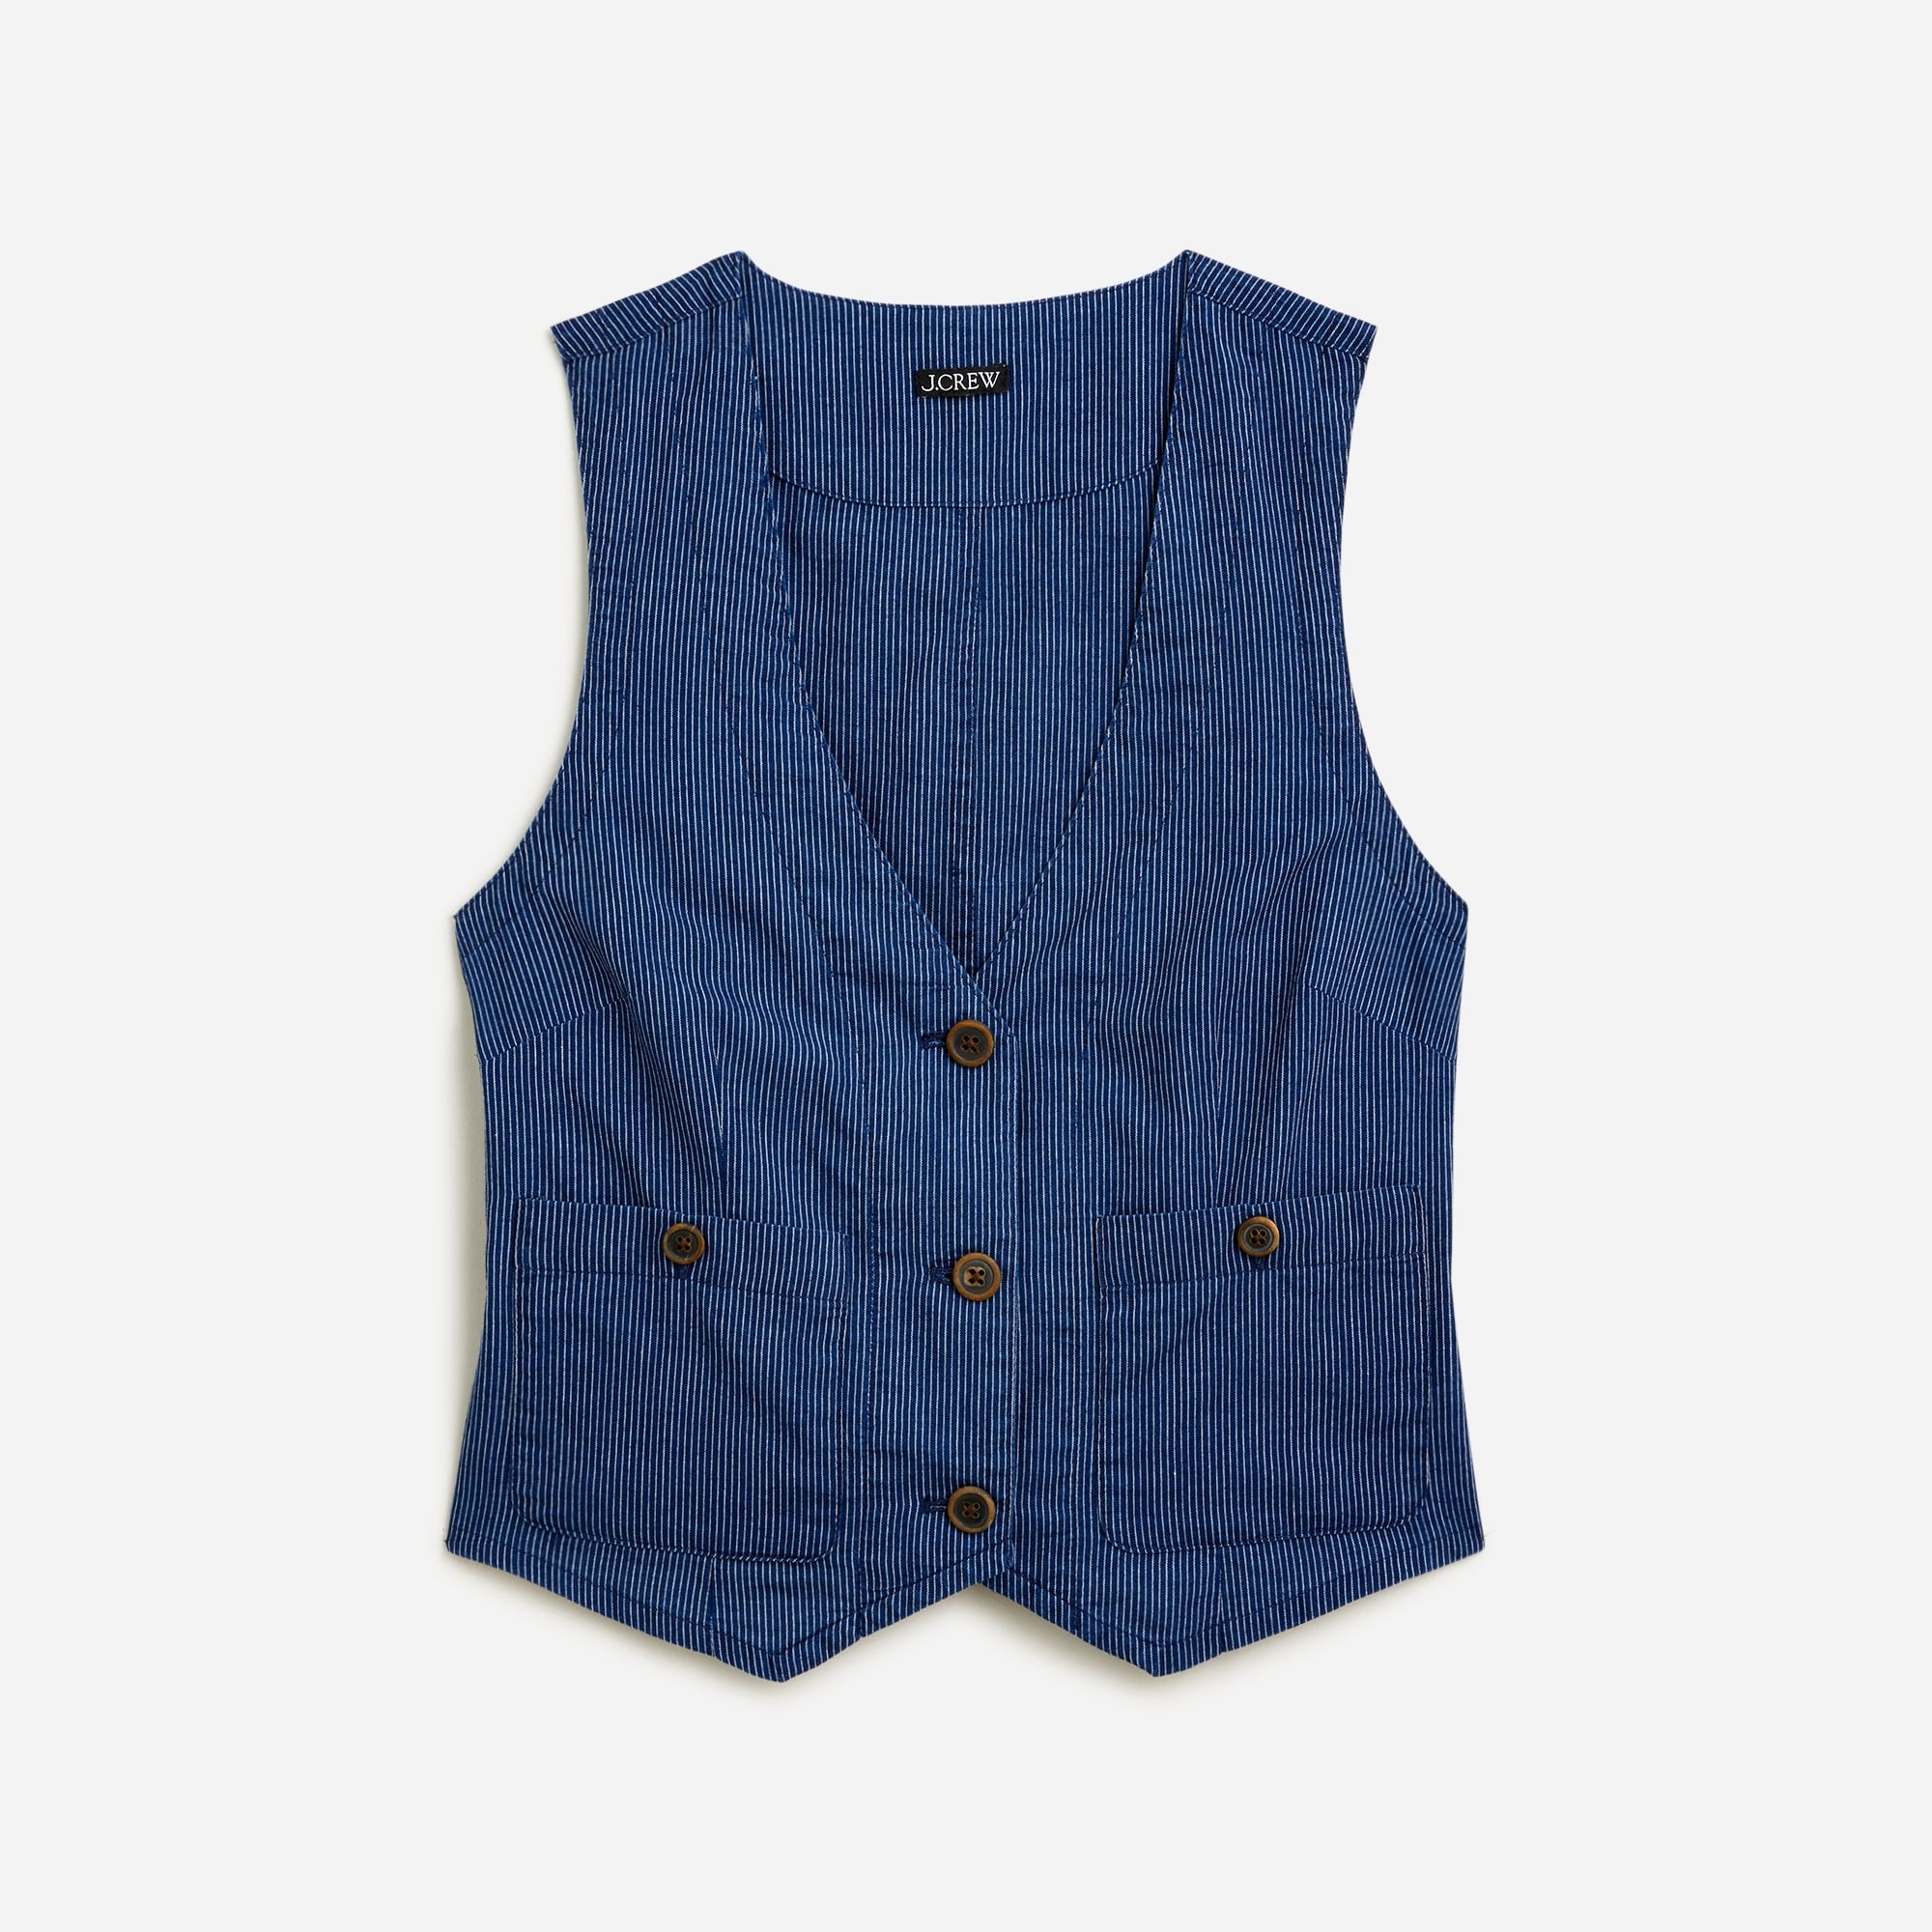  Patch-pocket vest in indigo stripe